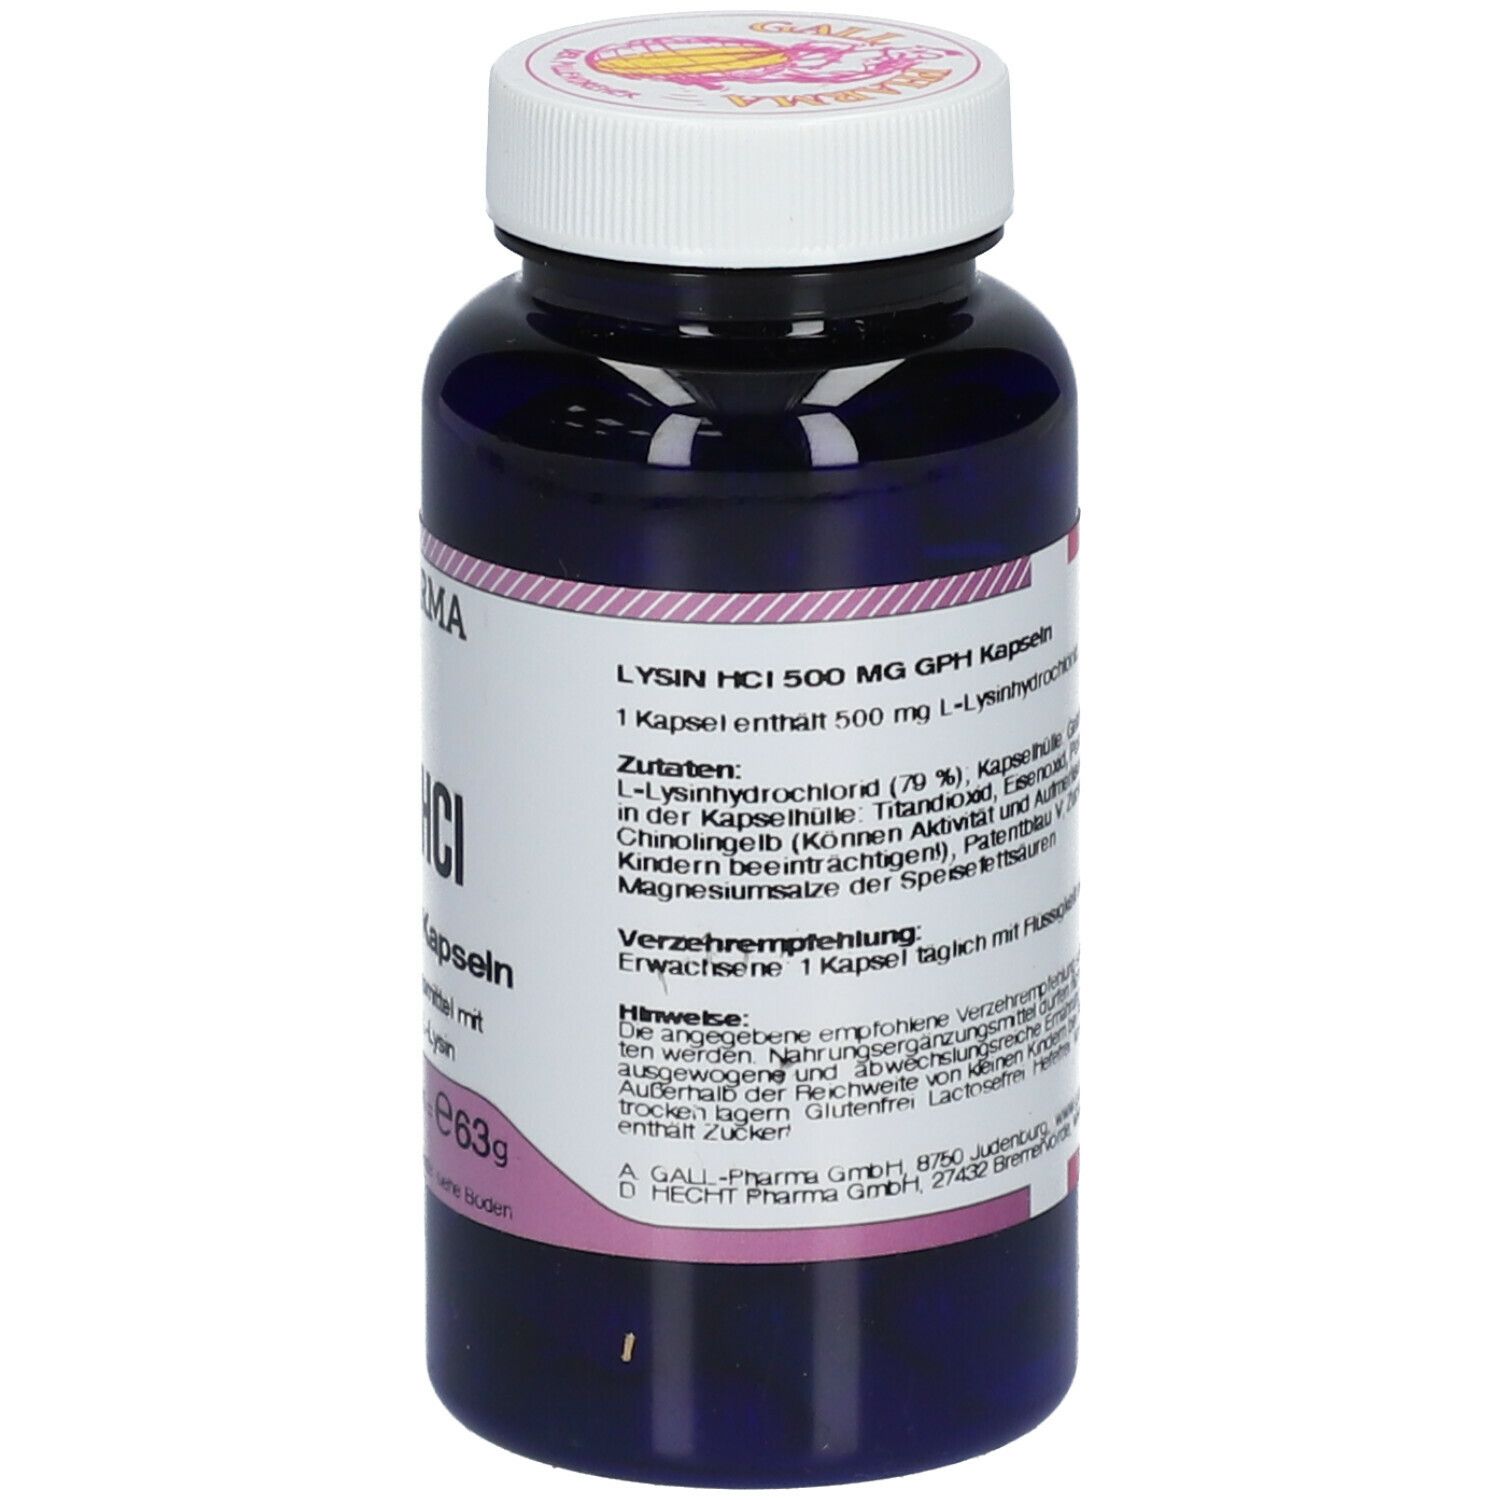 GALL PHARMA Lysine HCl 500 mg GPH Capsules